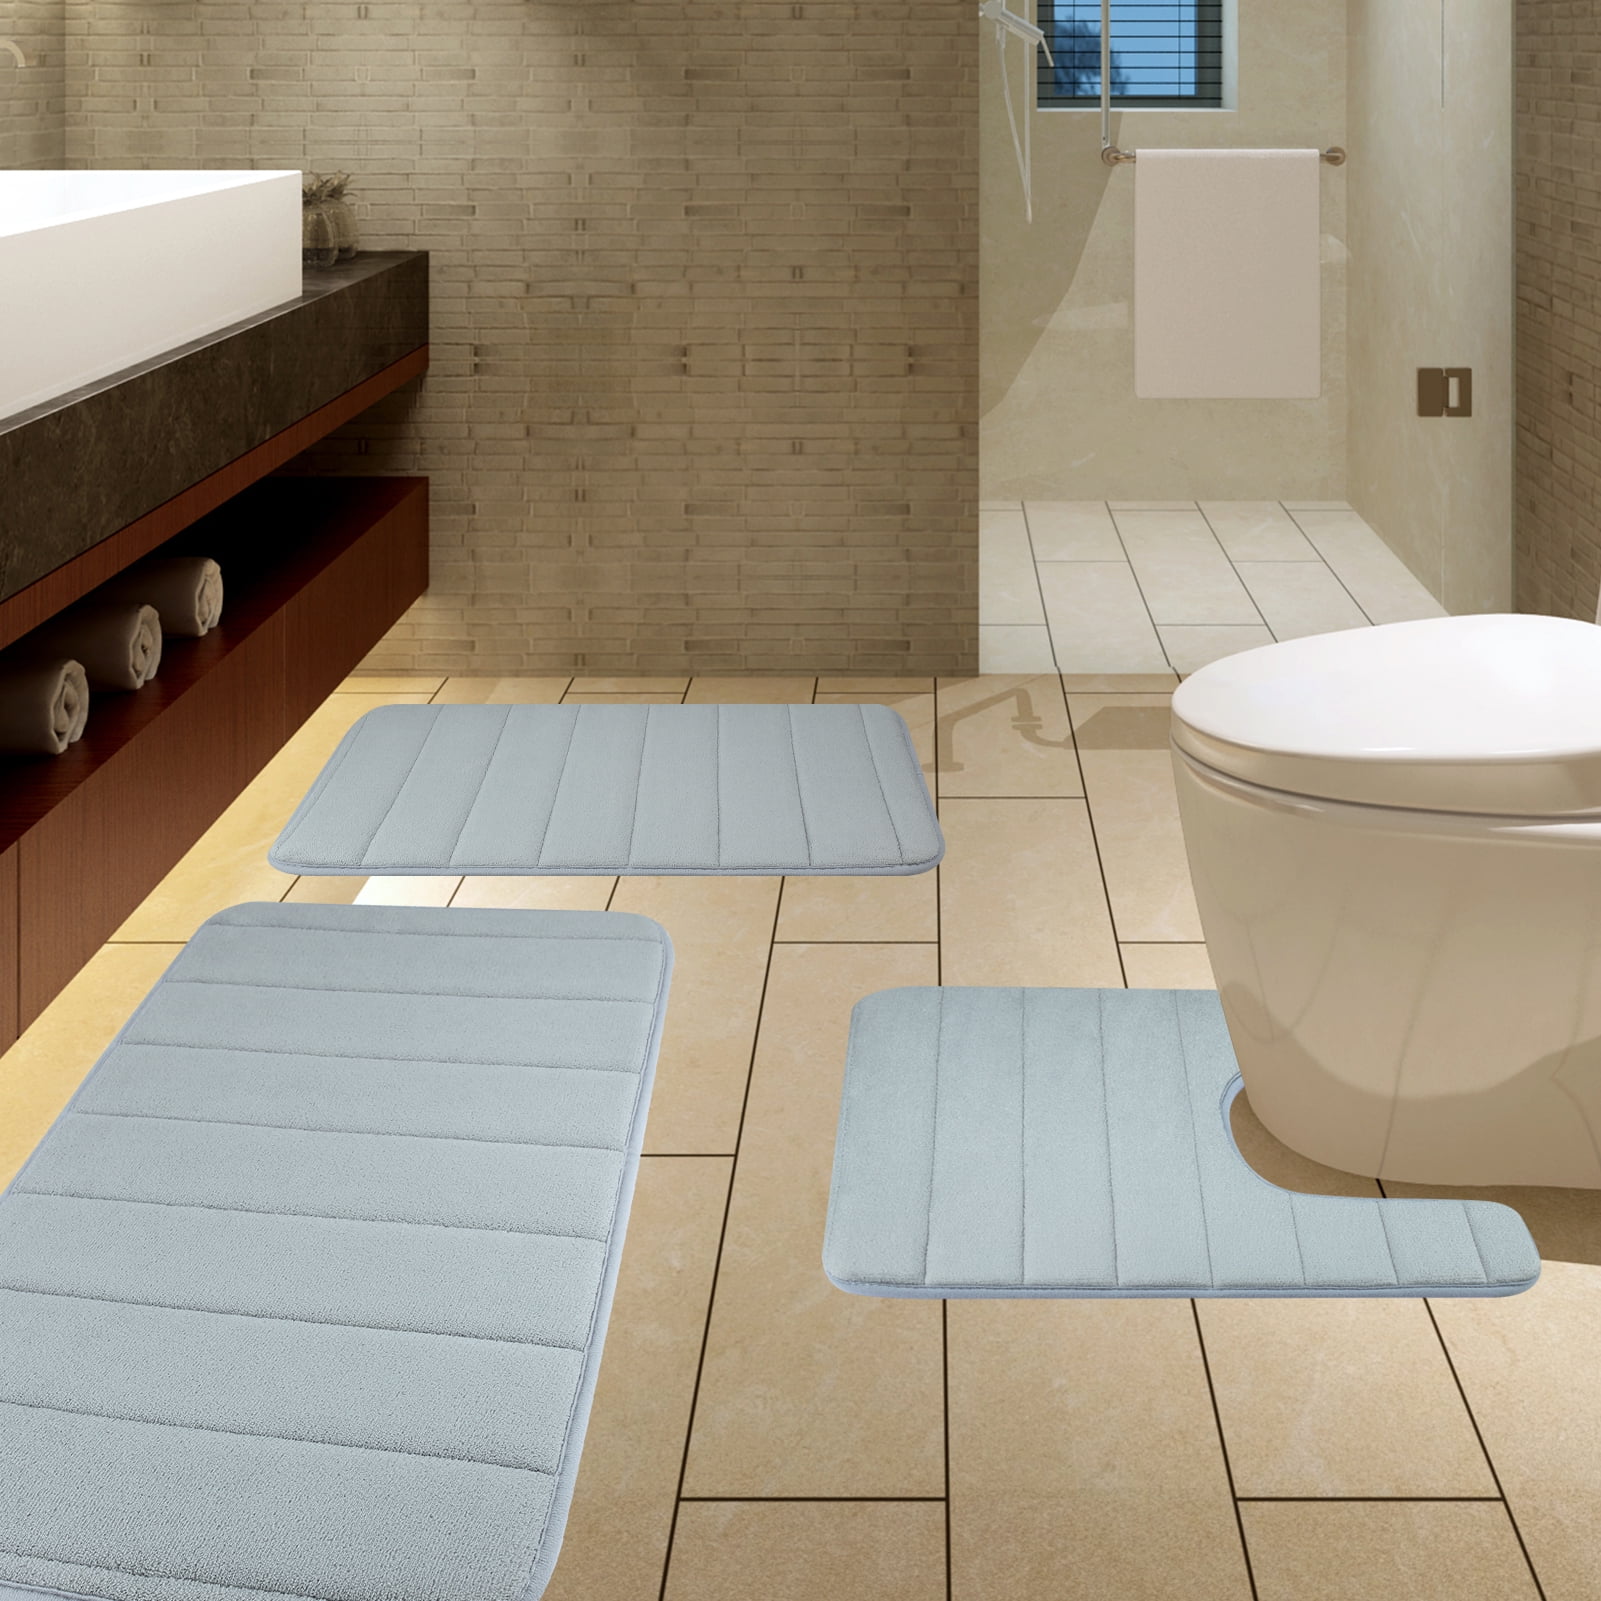 Aisaving 3pcs Non Slip Bath Mat Set Super Soft Pedestal and Bath Rug Memory Foam Pebble Shower Mat Quick Drying Bathroom Mat Carpet,U-Shaped Contour